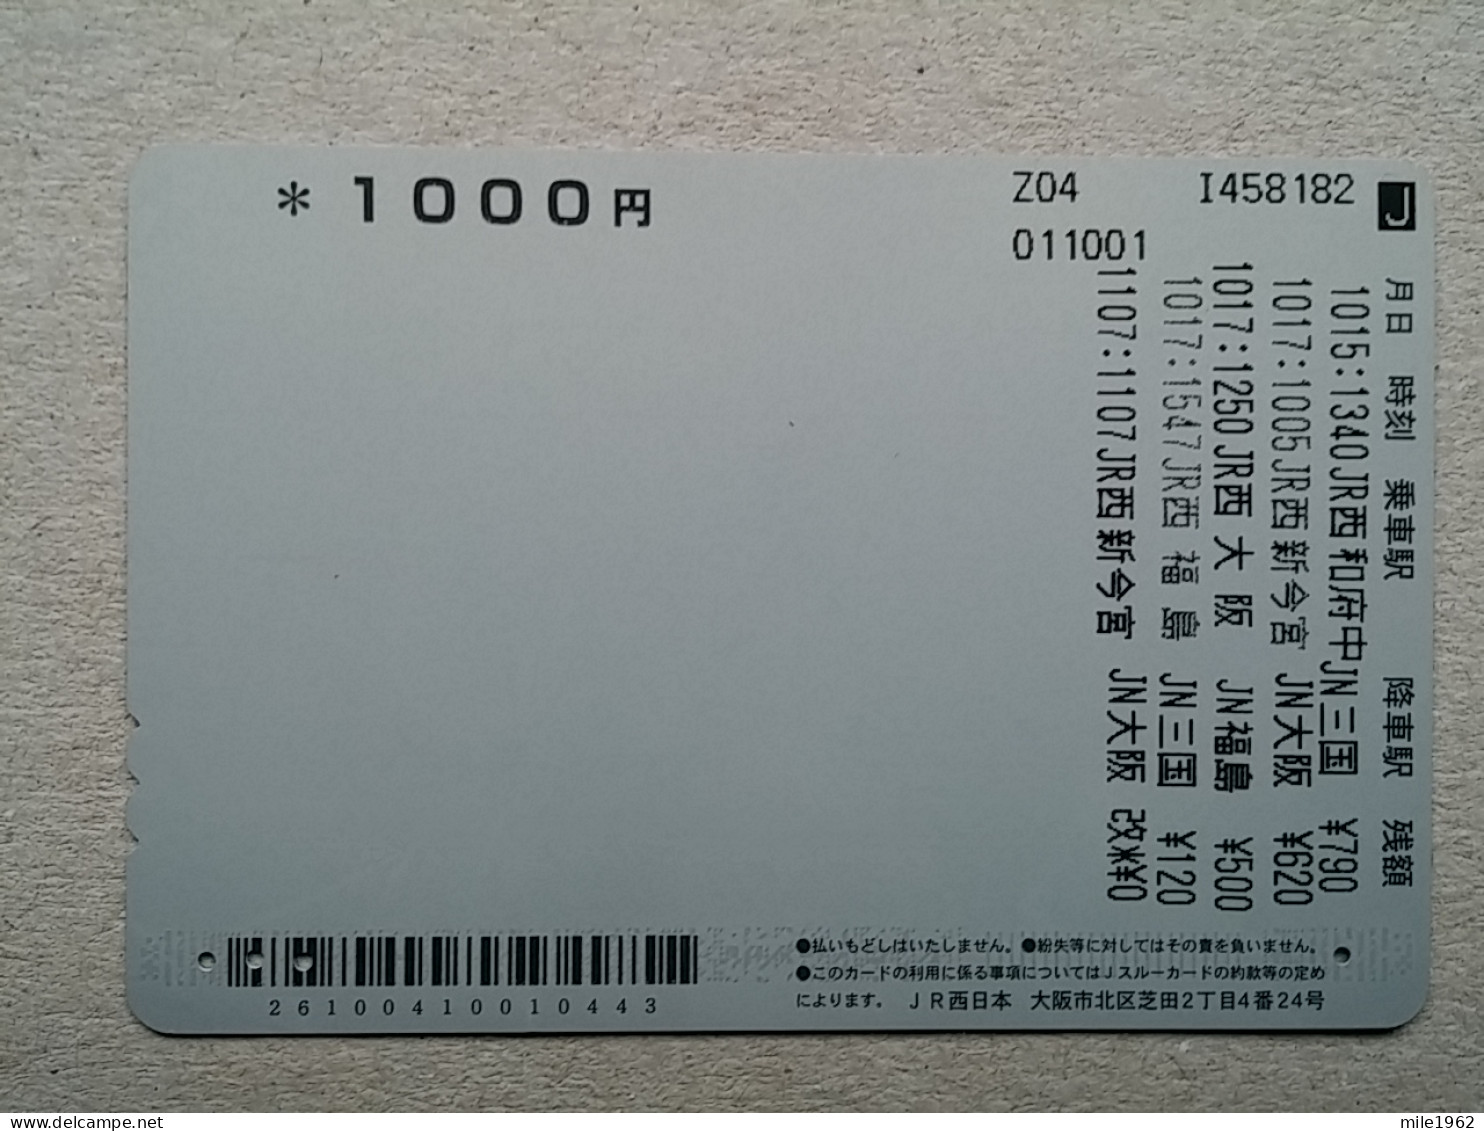 T-615 - JAPAN, Japon, Nipon, Carte Prepayee, Prepaid Card, CARD, RAILWAY, TRAIN, CHEMIN DE FER - Trenes